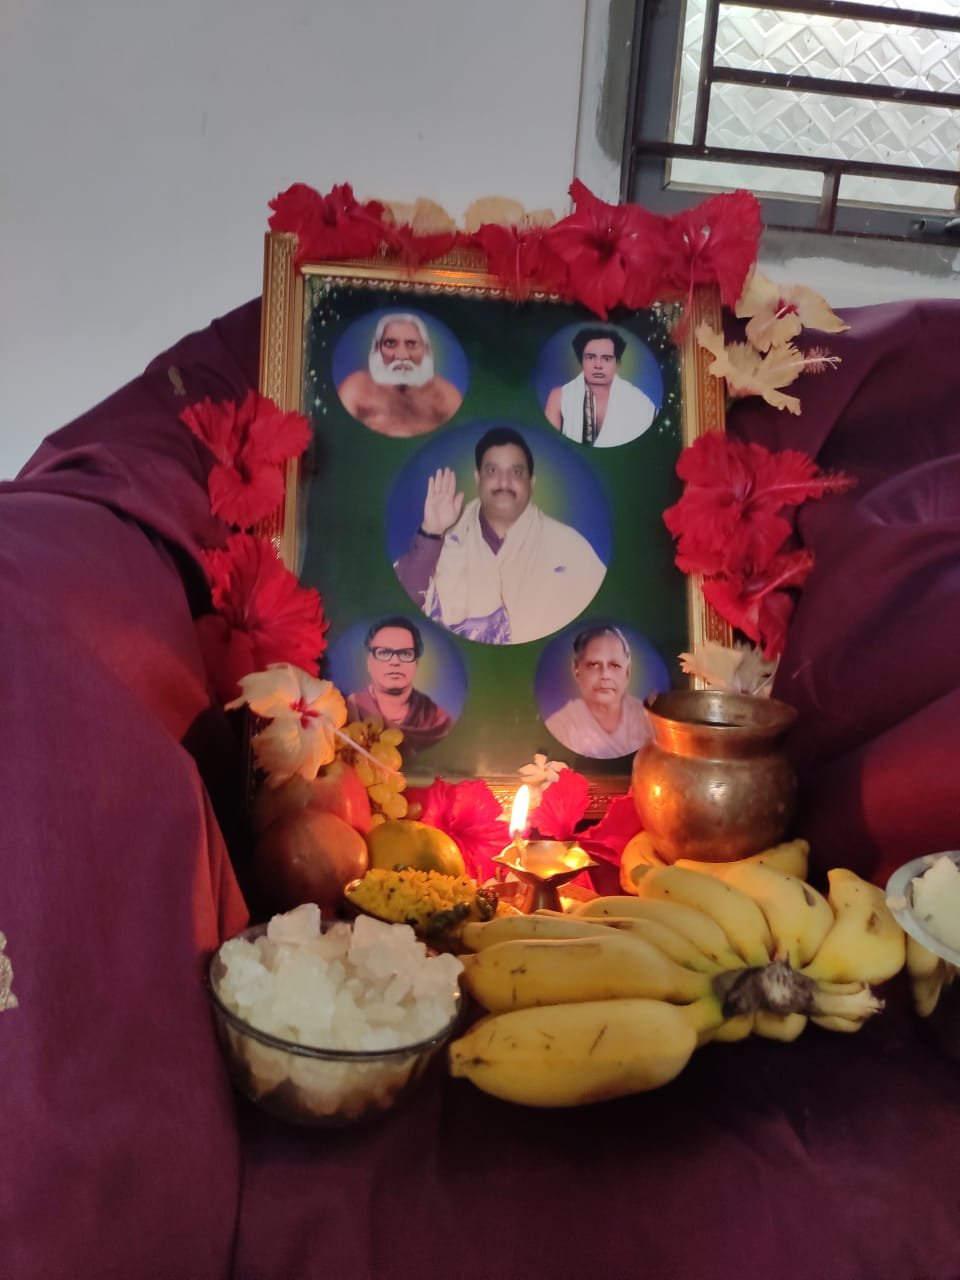 India-Seetharampuram-Weekly Aaradhana at Ashram on 04-March-2020